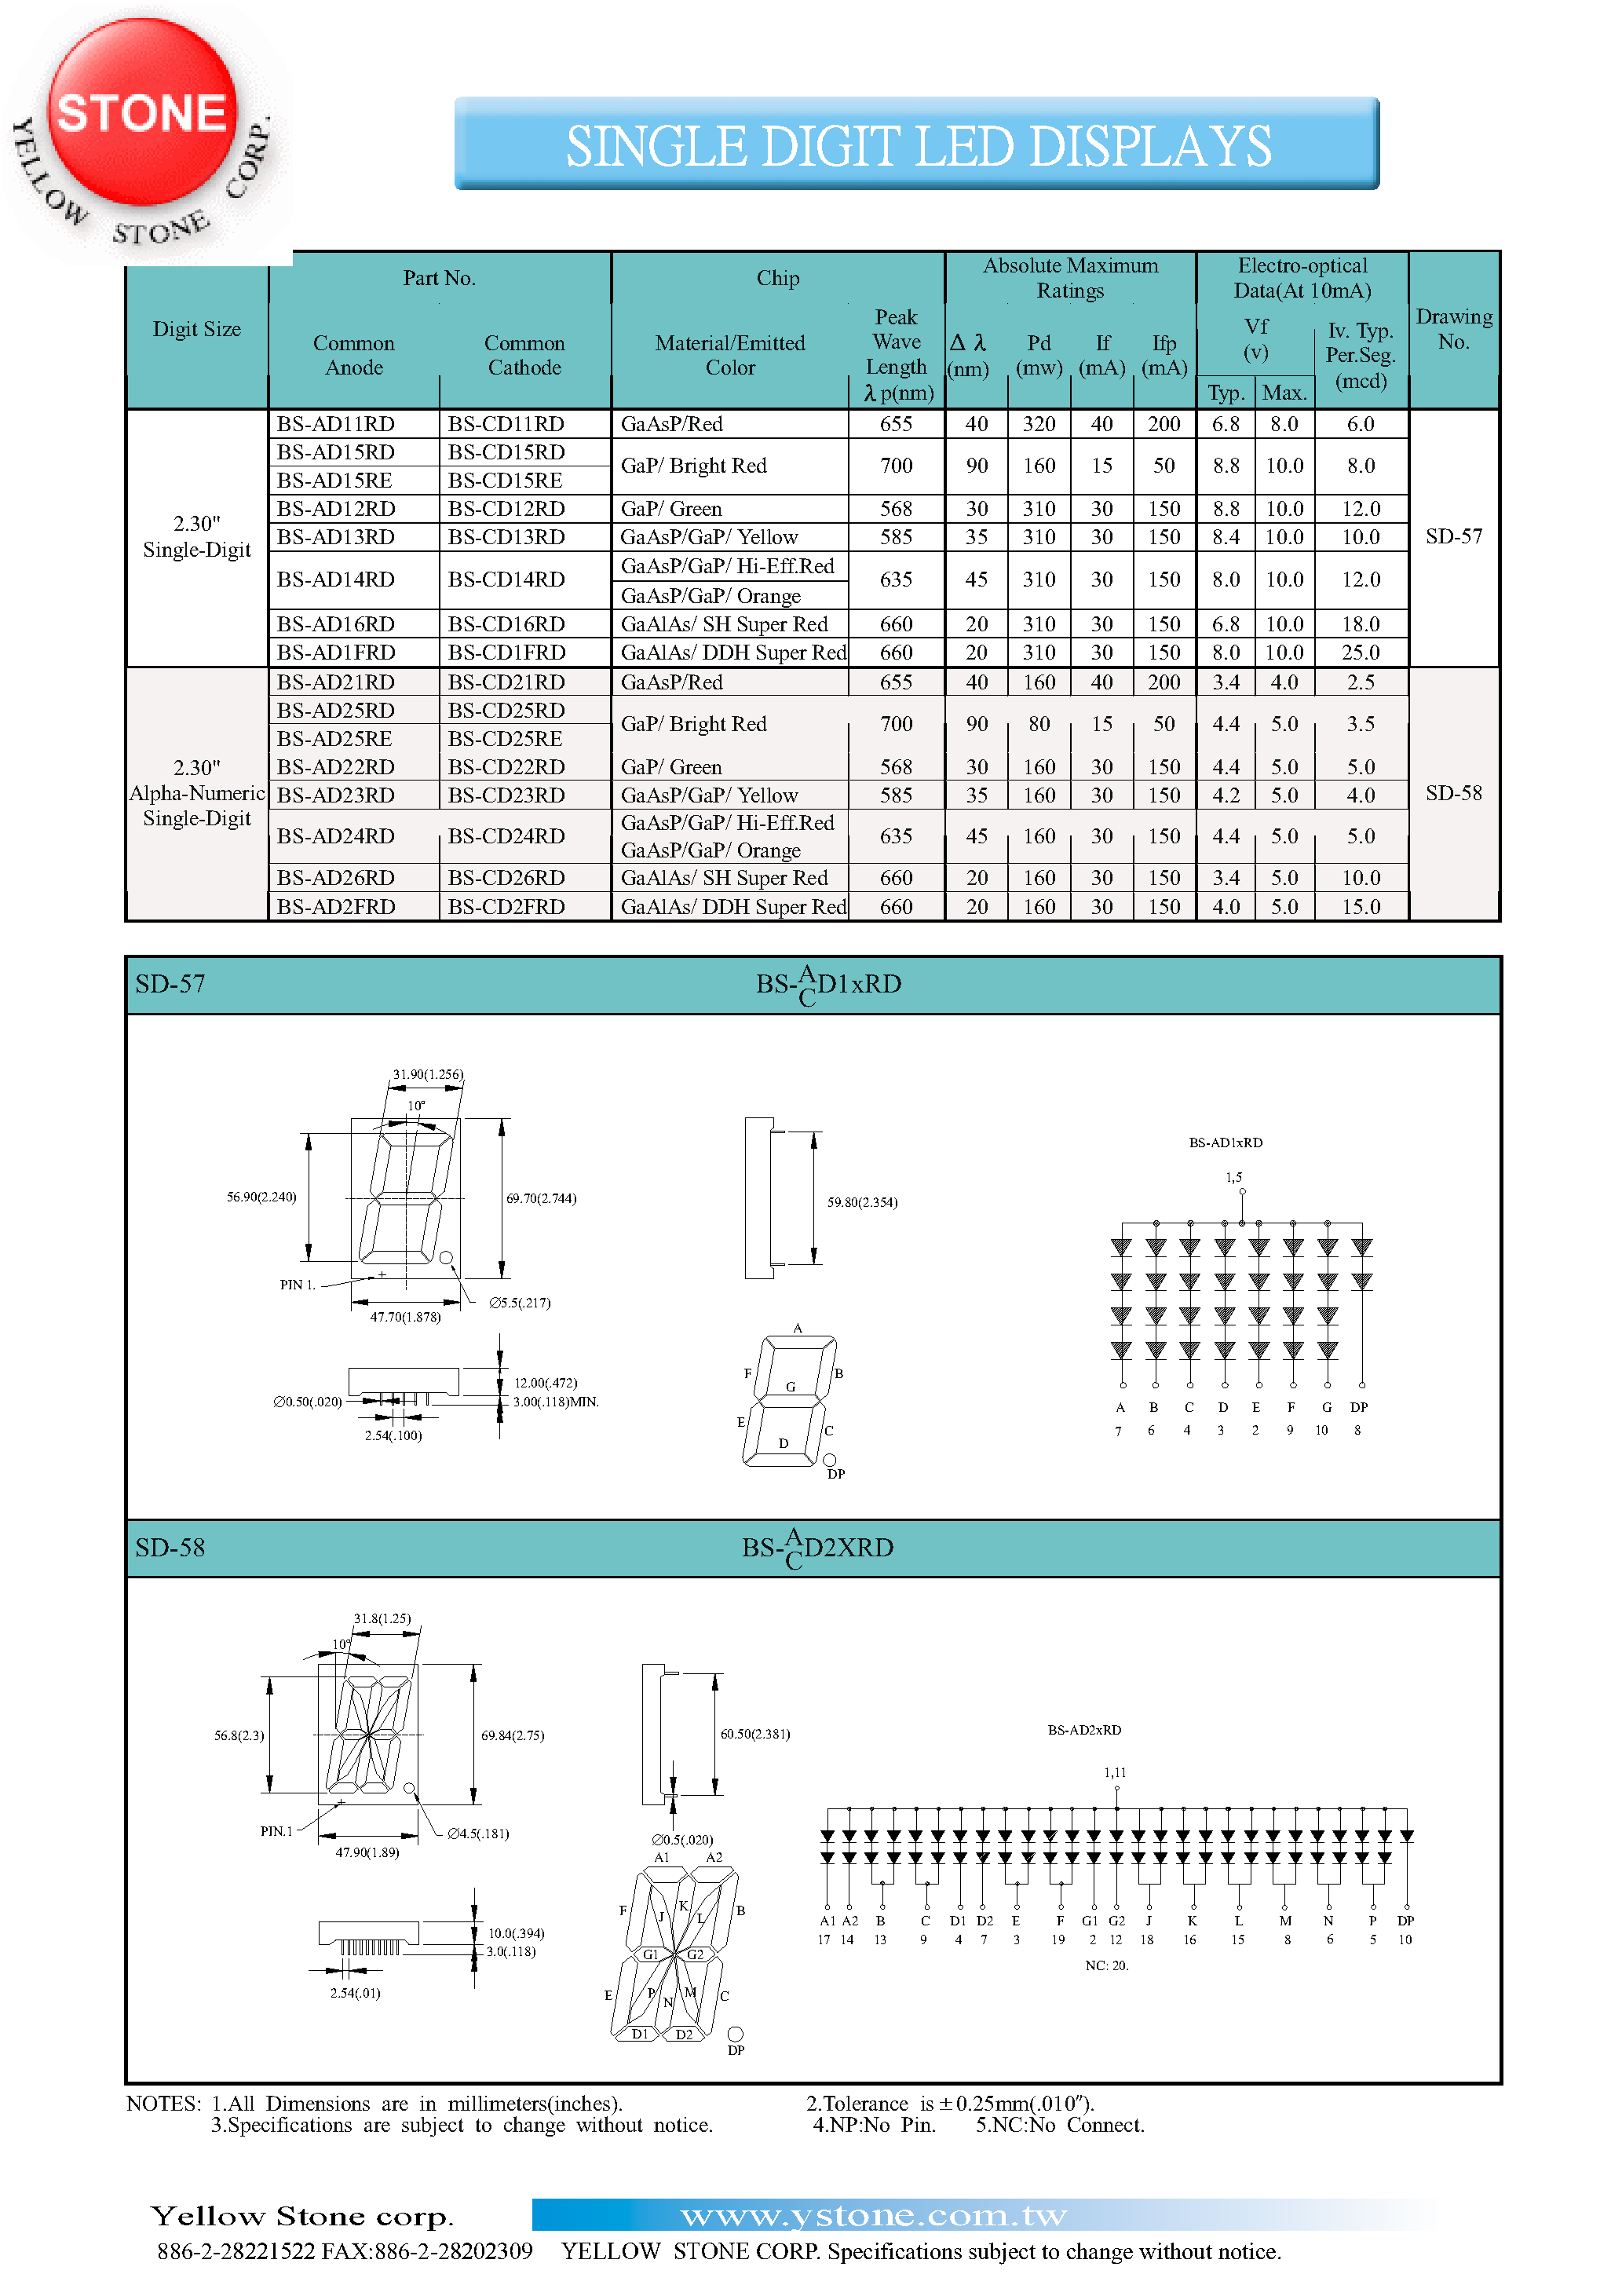 Datasheet BS-AD15RE - SINGLE DIGIT LED DISPLAYS page 1